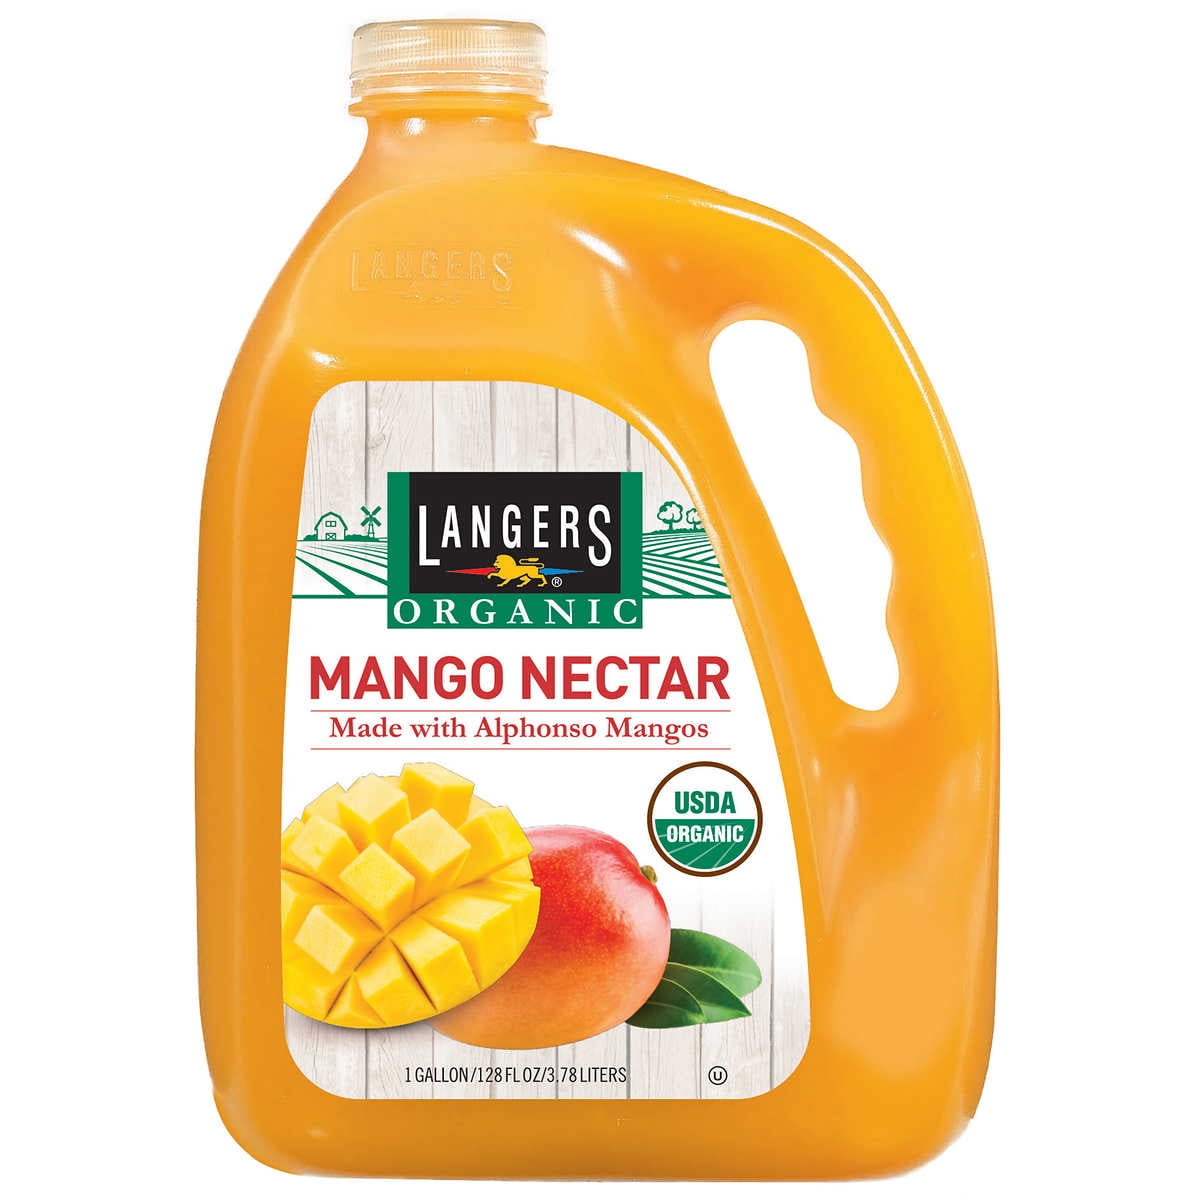 Langers Organic Mango Nectar Juice, 128 oz - Walmart.com - Walmart.com.